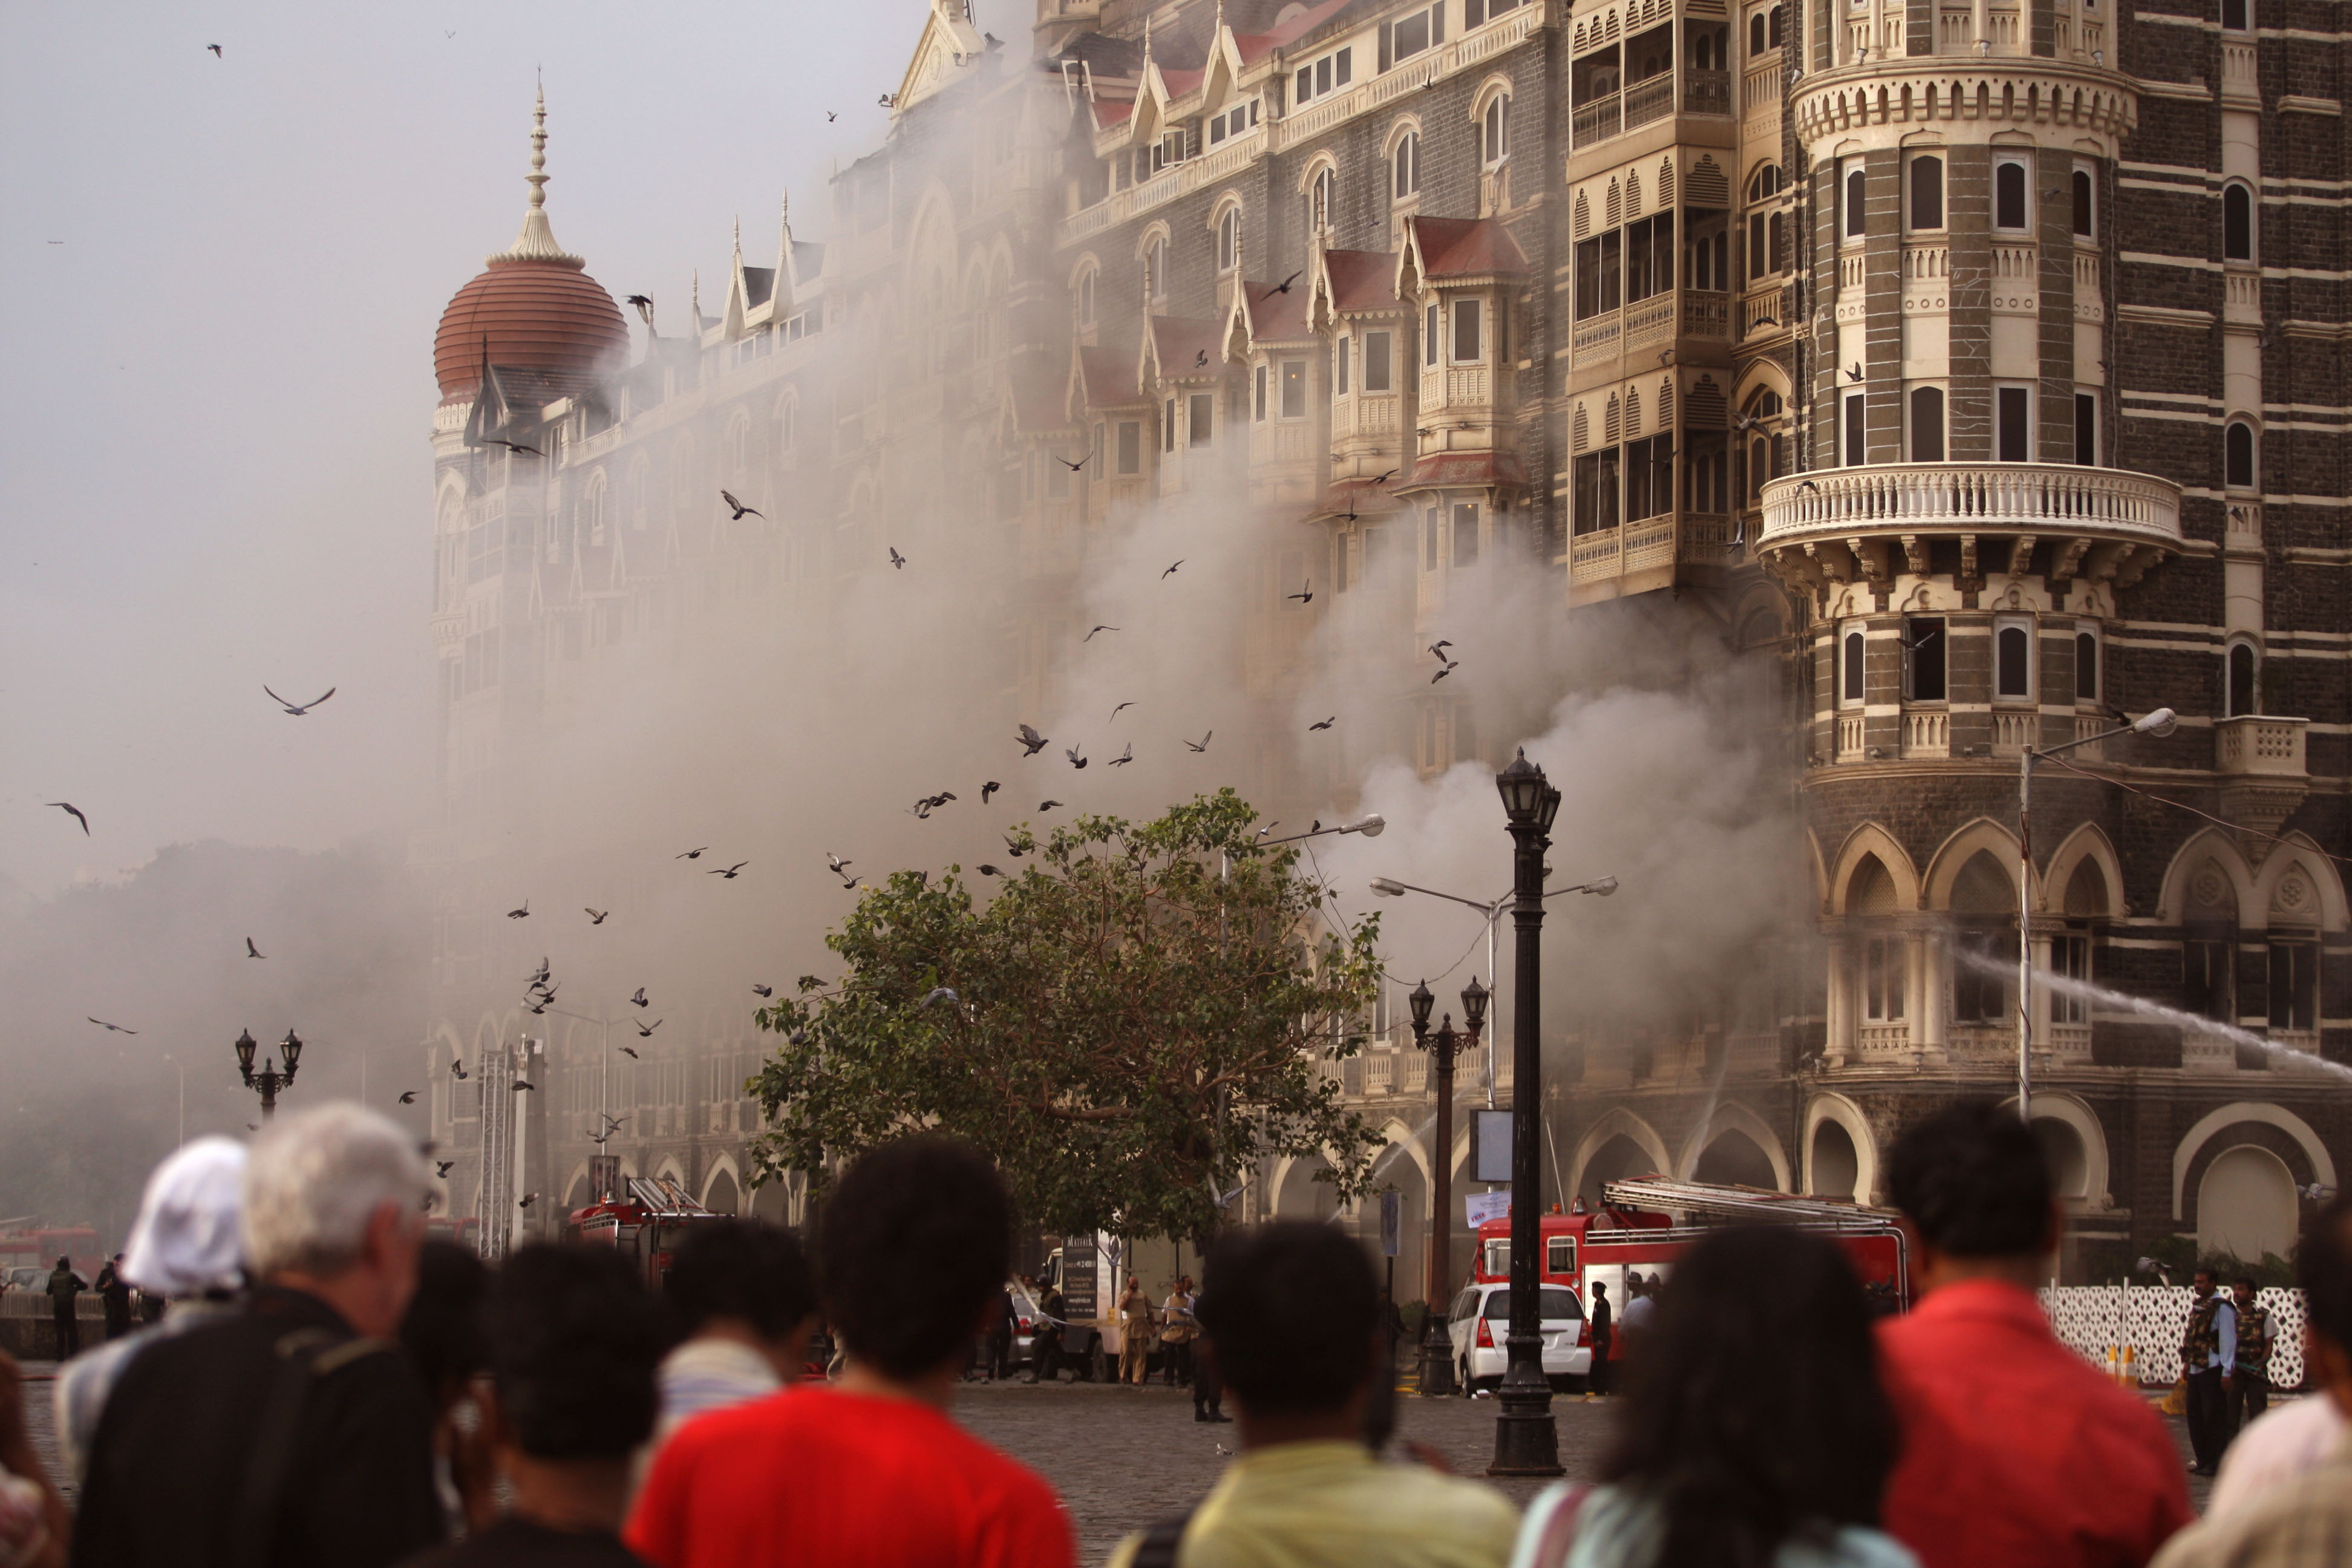 Нападение на отели. Мумбаи 2008 Тадж Махал теракт. Теракт в Индии 2008 Тадж Махал. Отель Мумбаи теракт 2008. Отель Тадж Махал 2008 теракт.